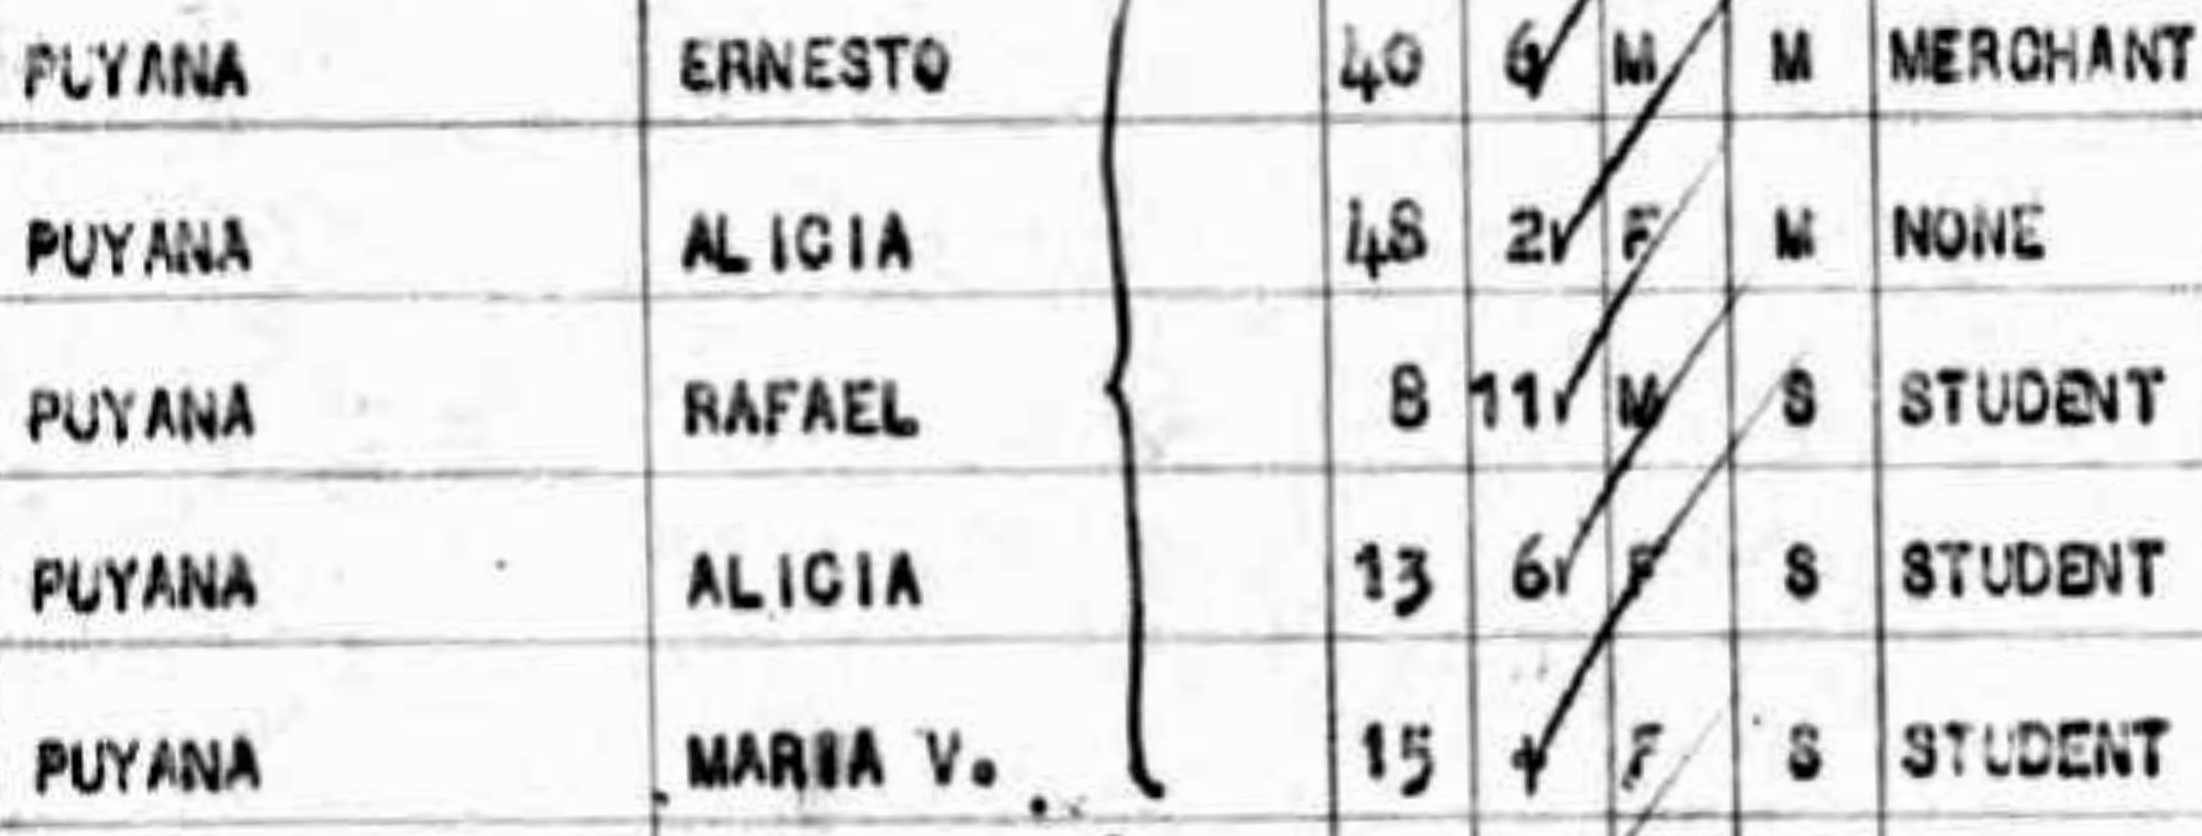 Puyana family 1940 passenger manifest